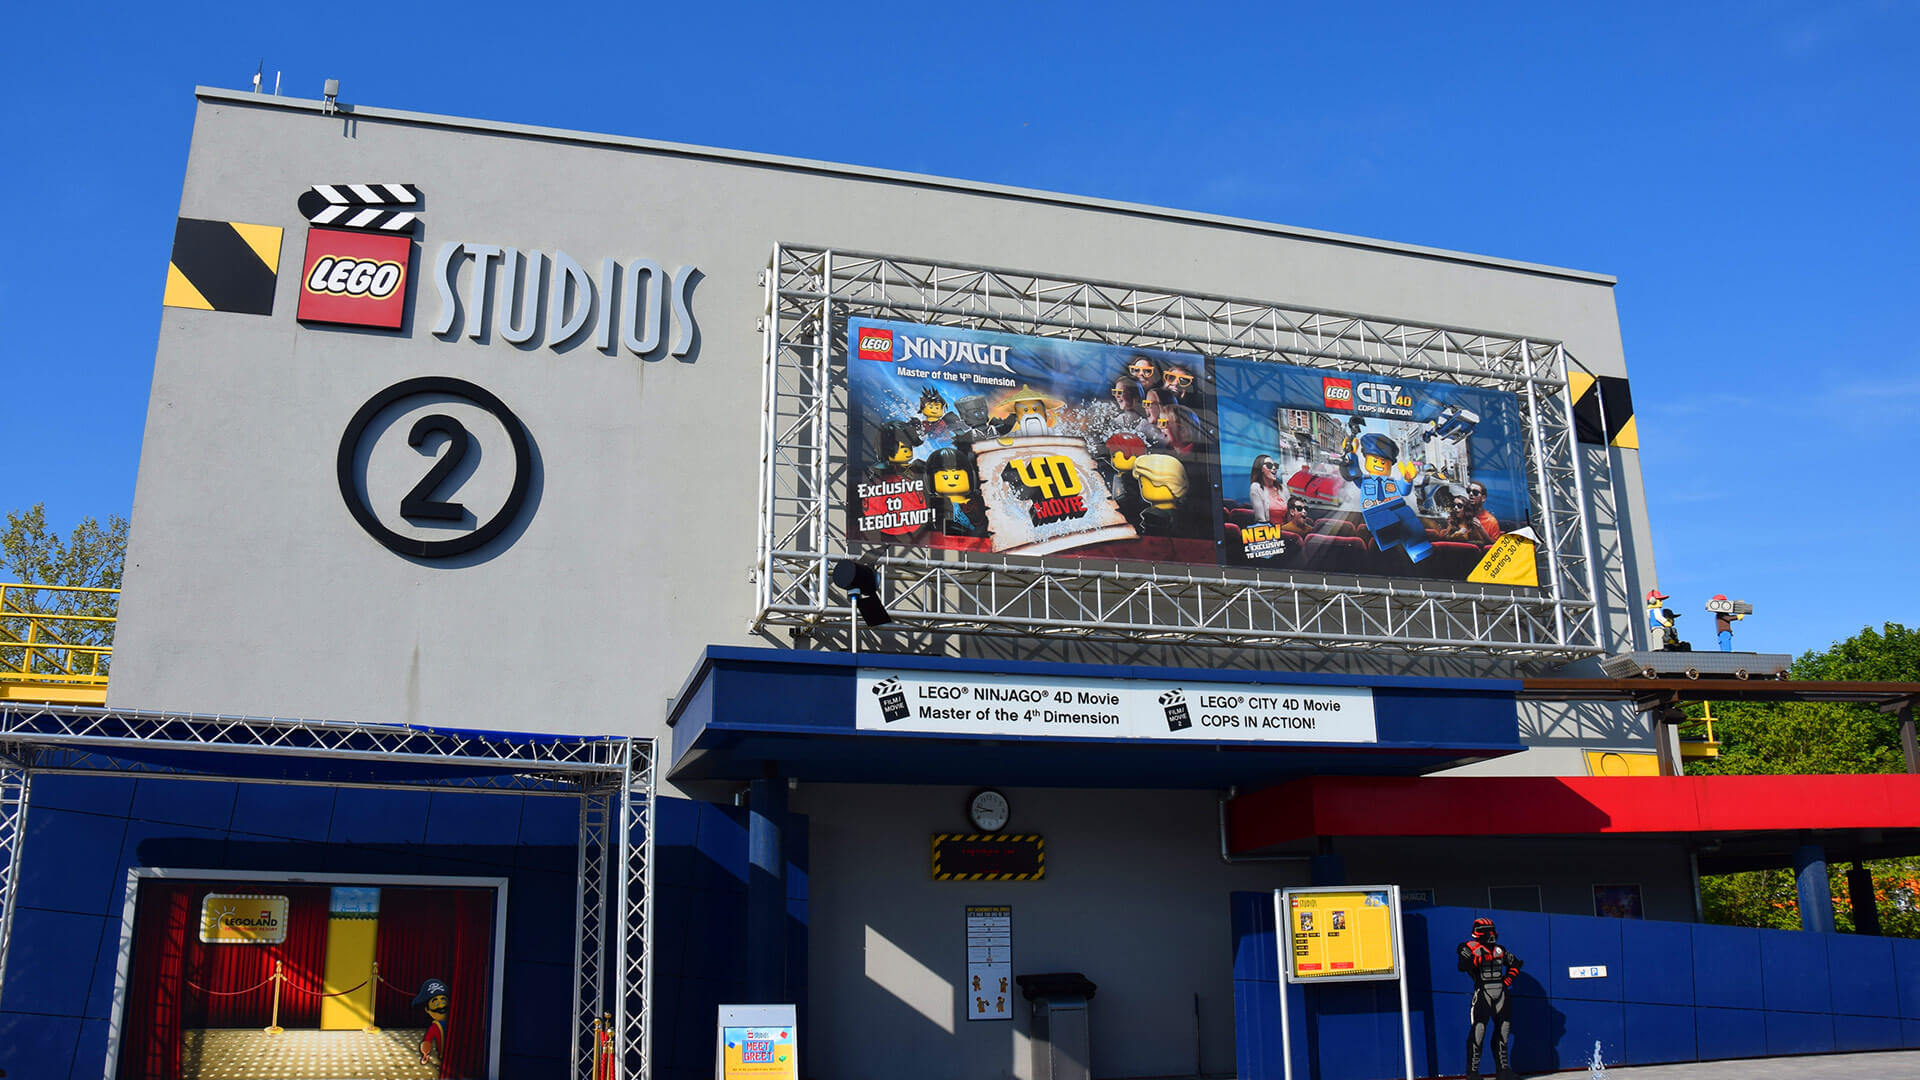 LEGOLAND LEGO Studios Kino